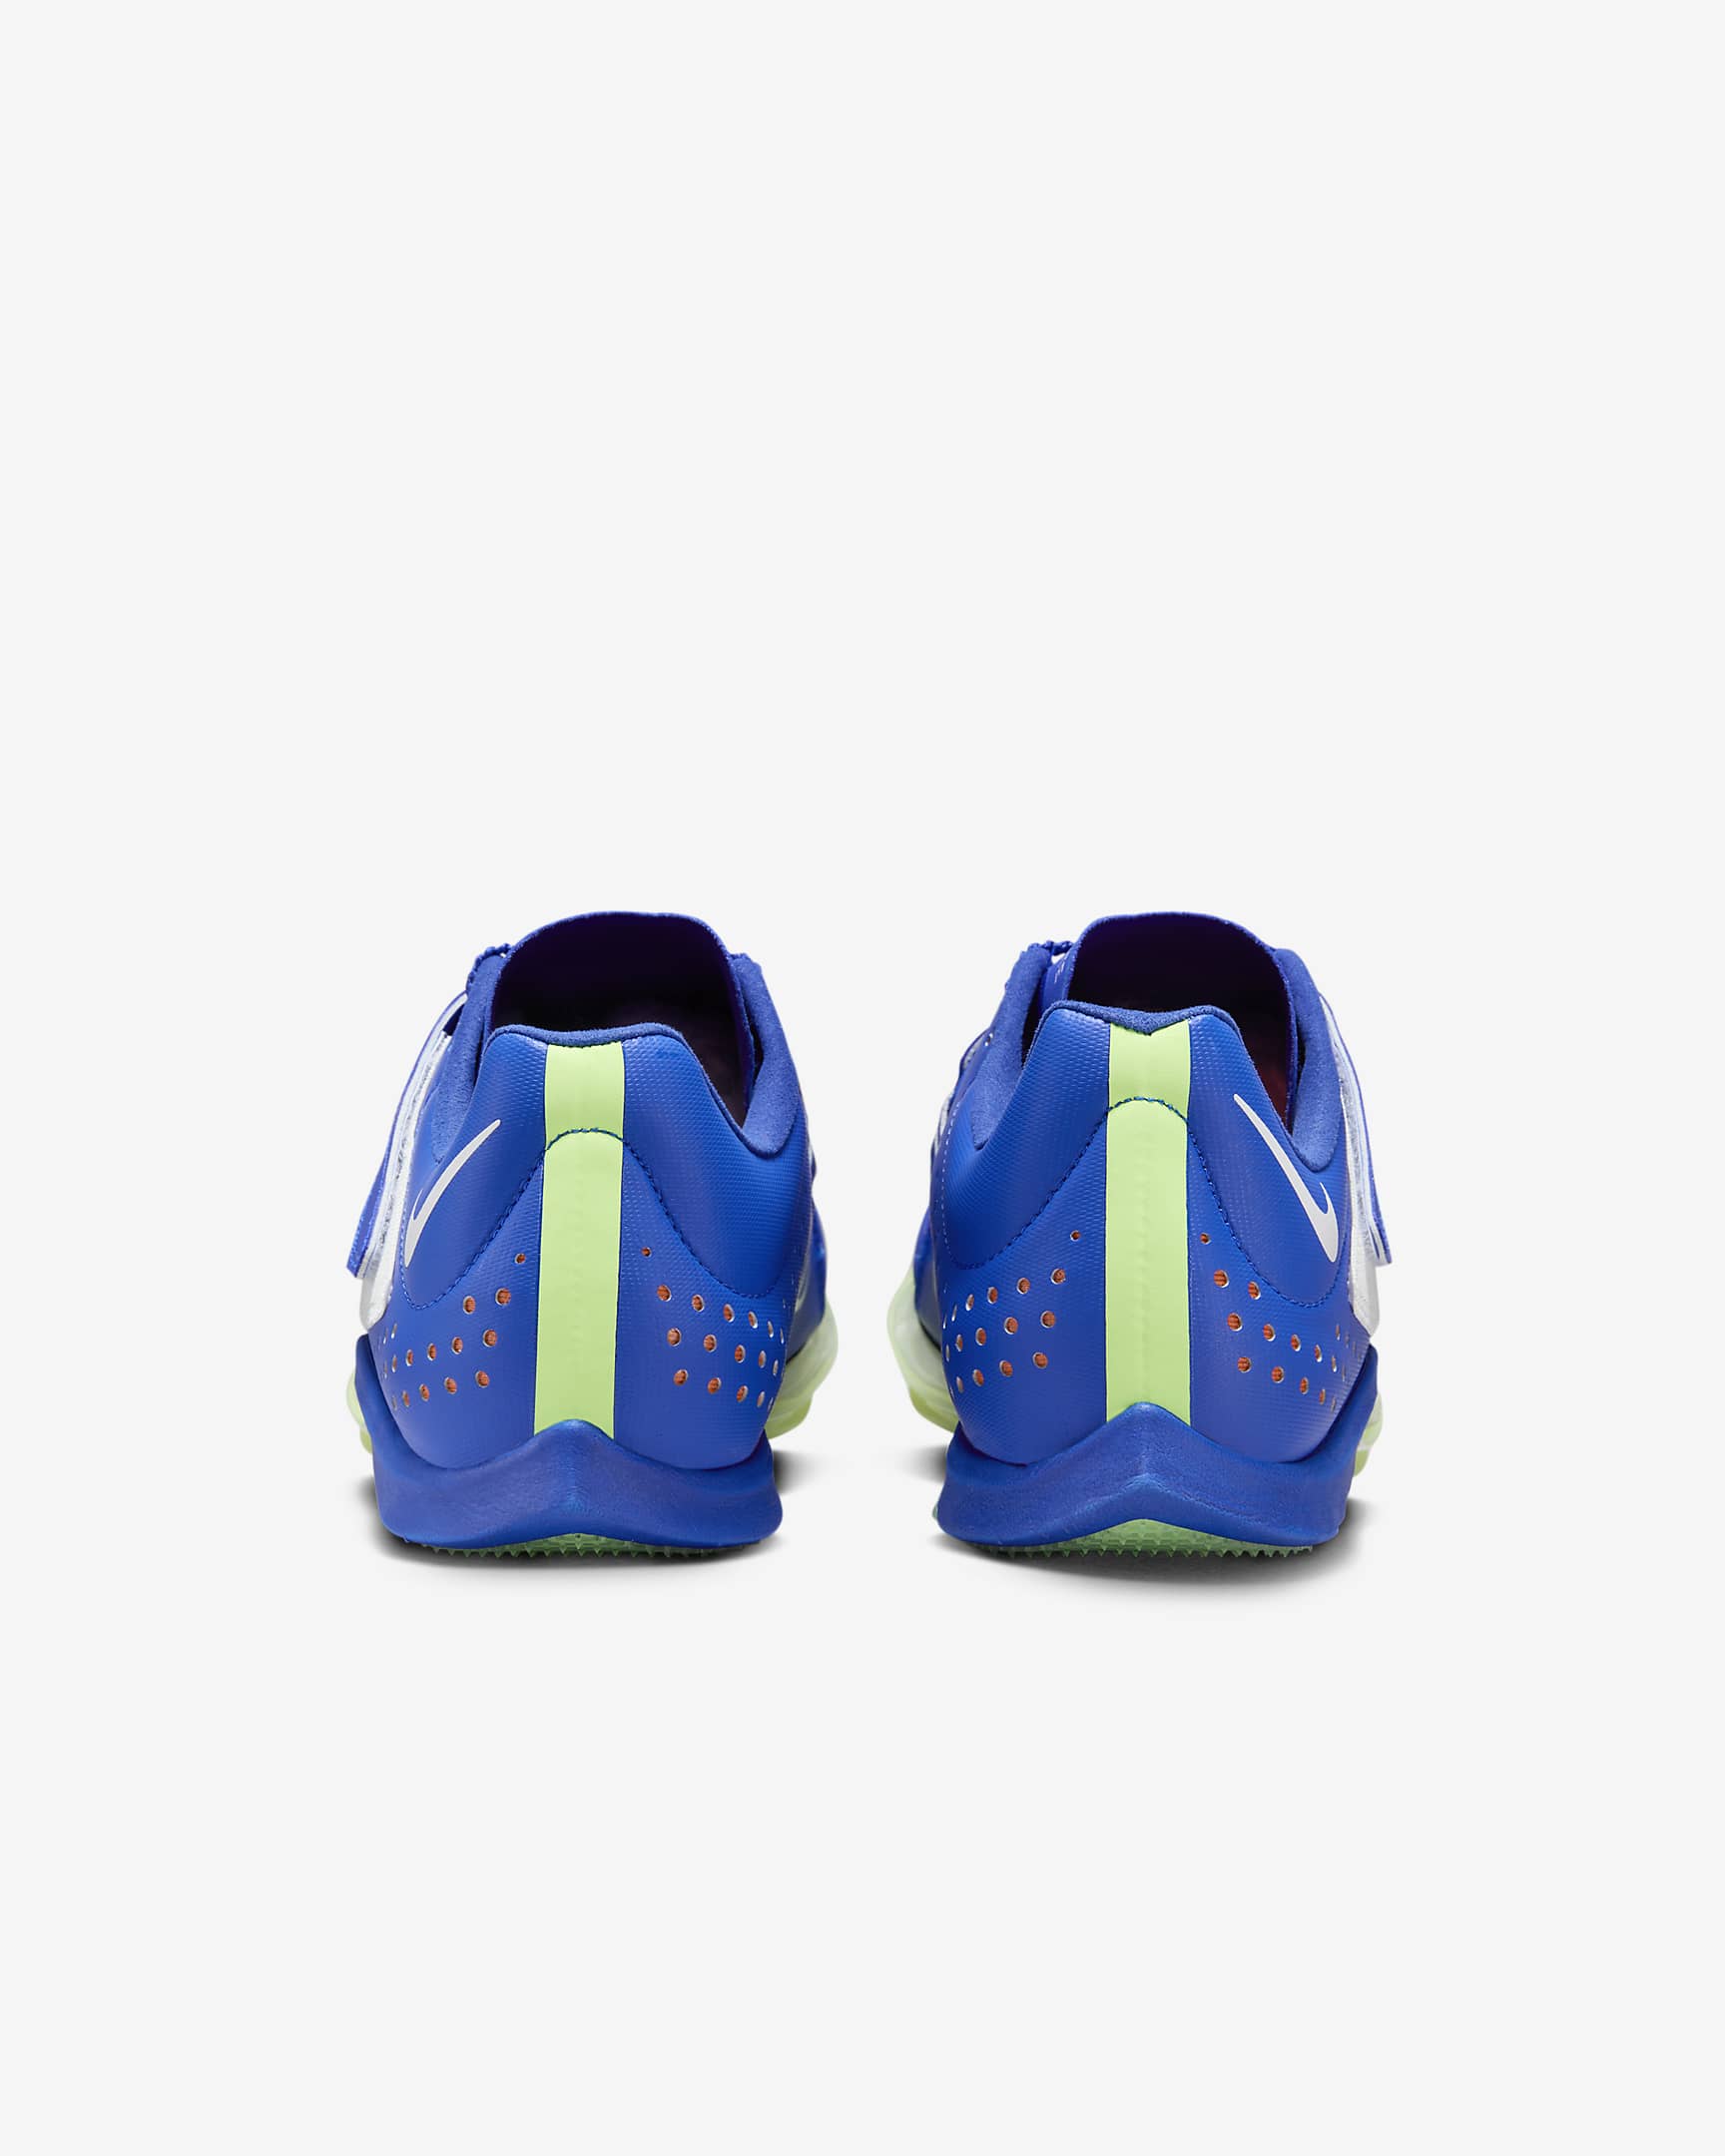 Nike Air Zoom LJ Elite Athletics Jumping Spikes - Racer Blue/Safety Orange/White